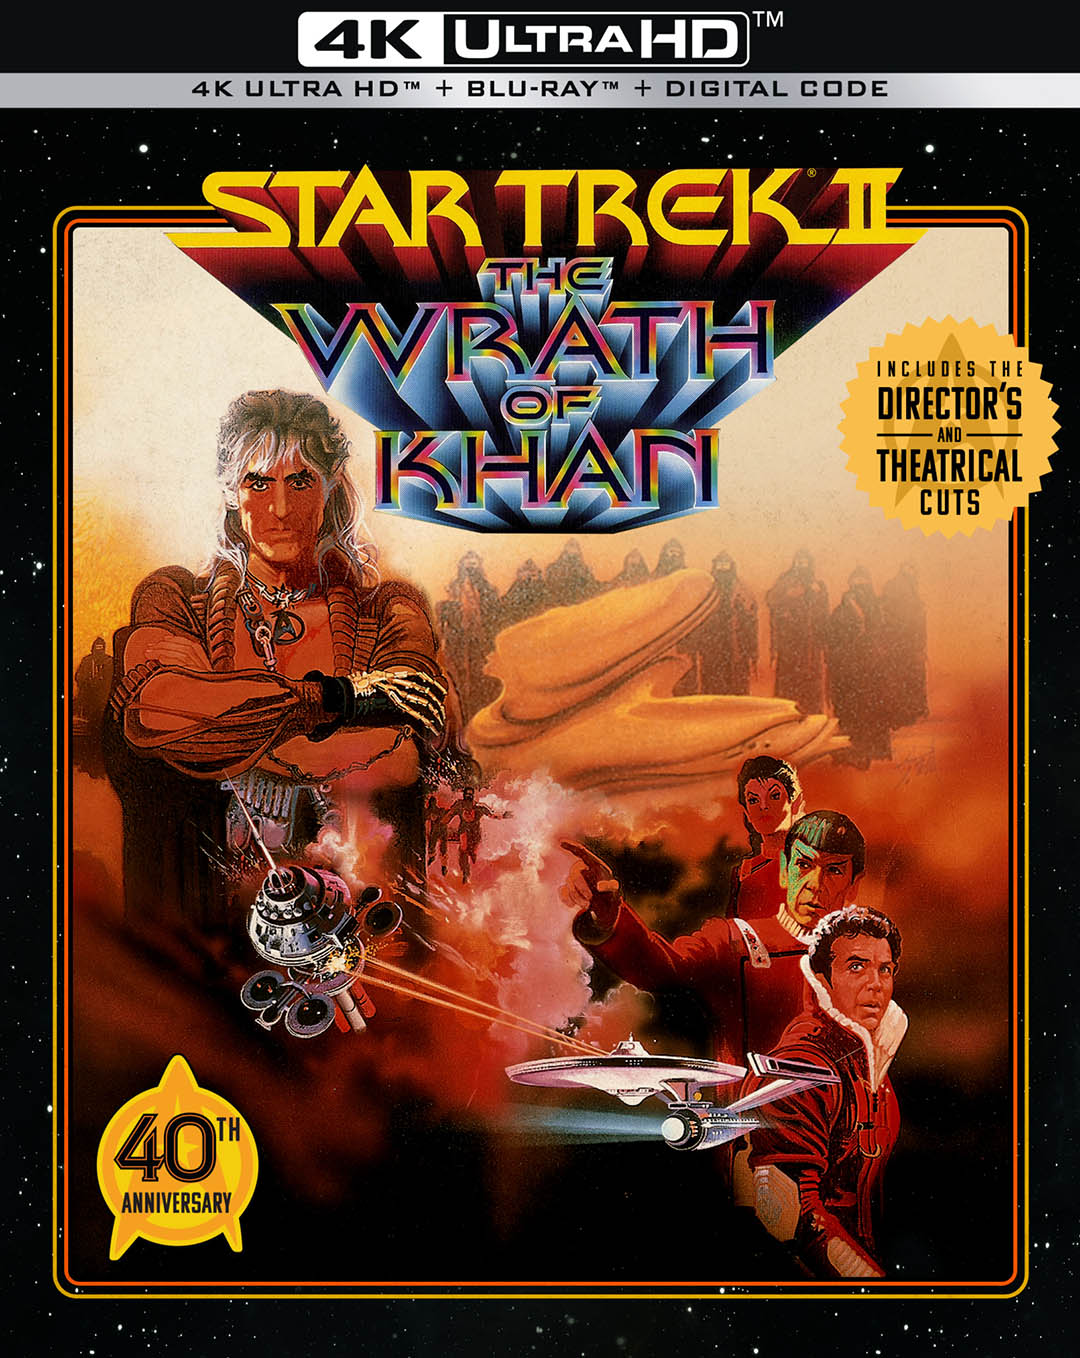 Star Trek II The Wrath of Khan 4k Blu-ray